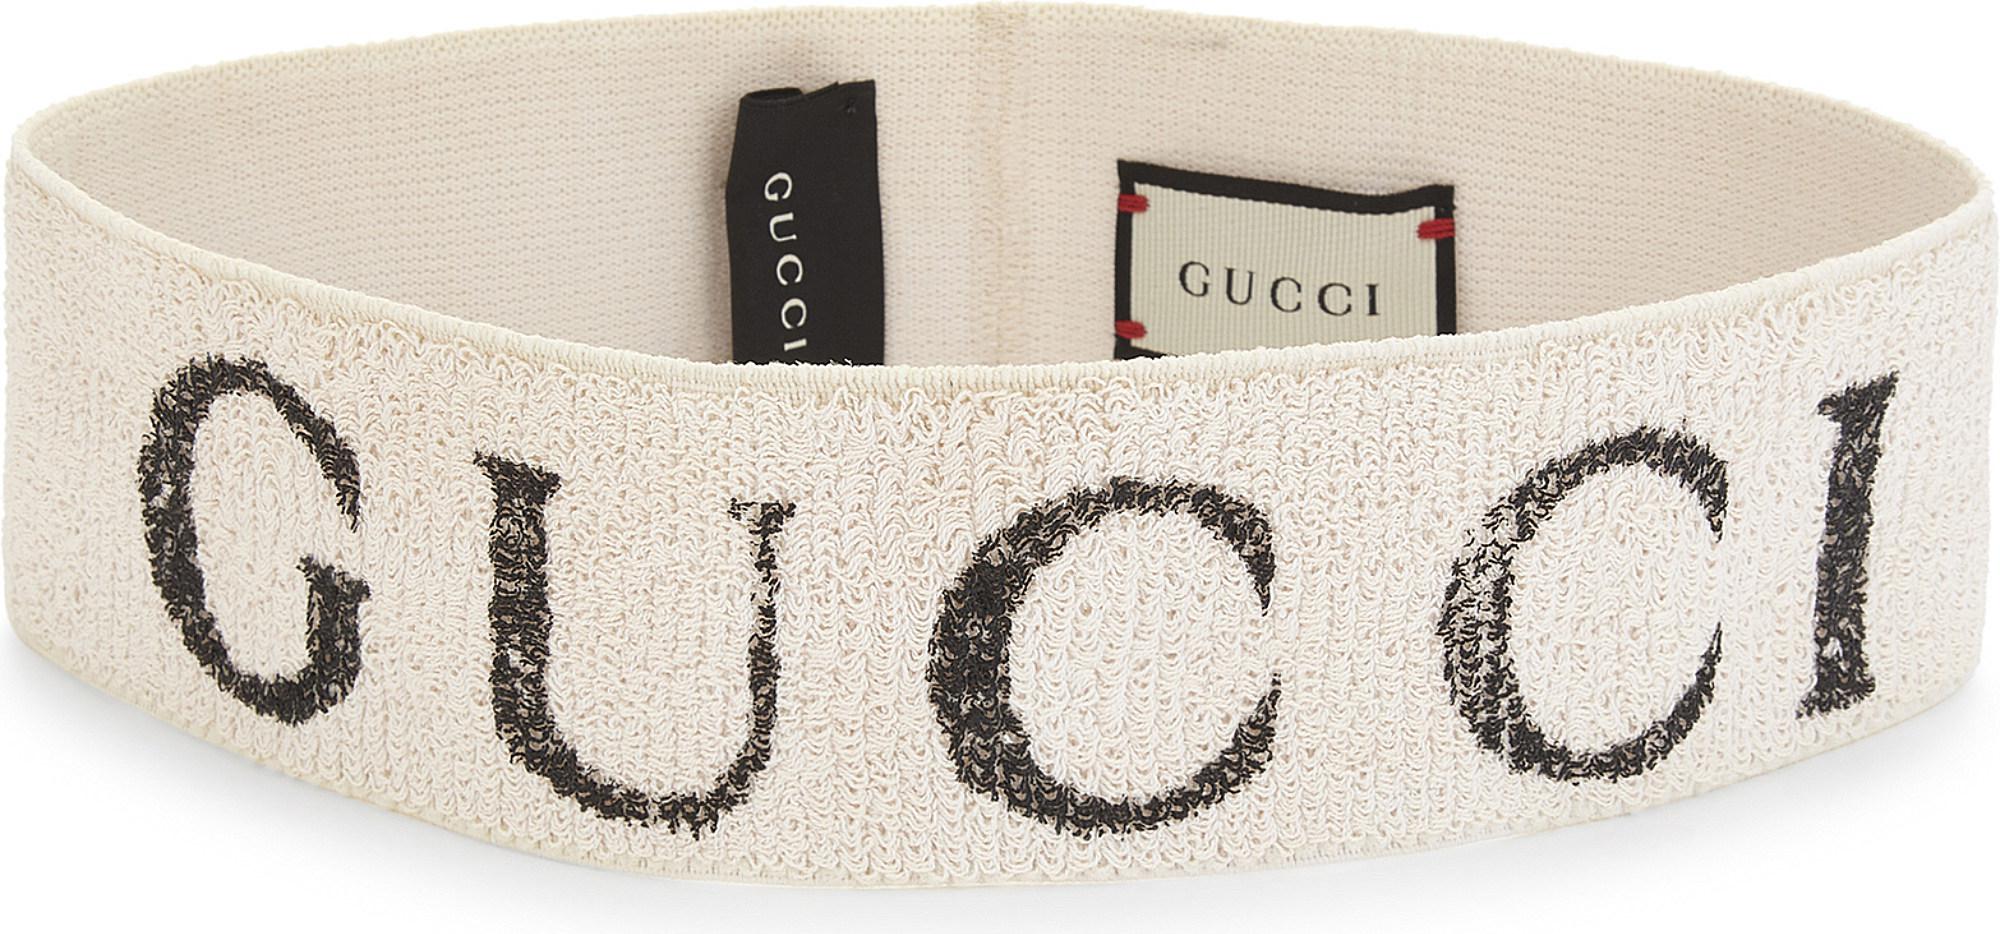 Gucci Logo Cotton-blend Headband in White/Black (White) - Lyst